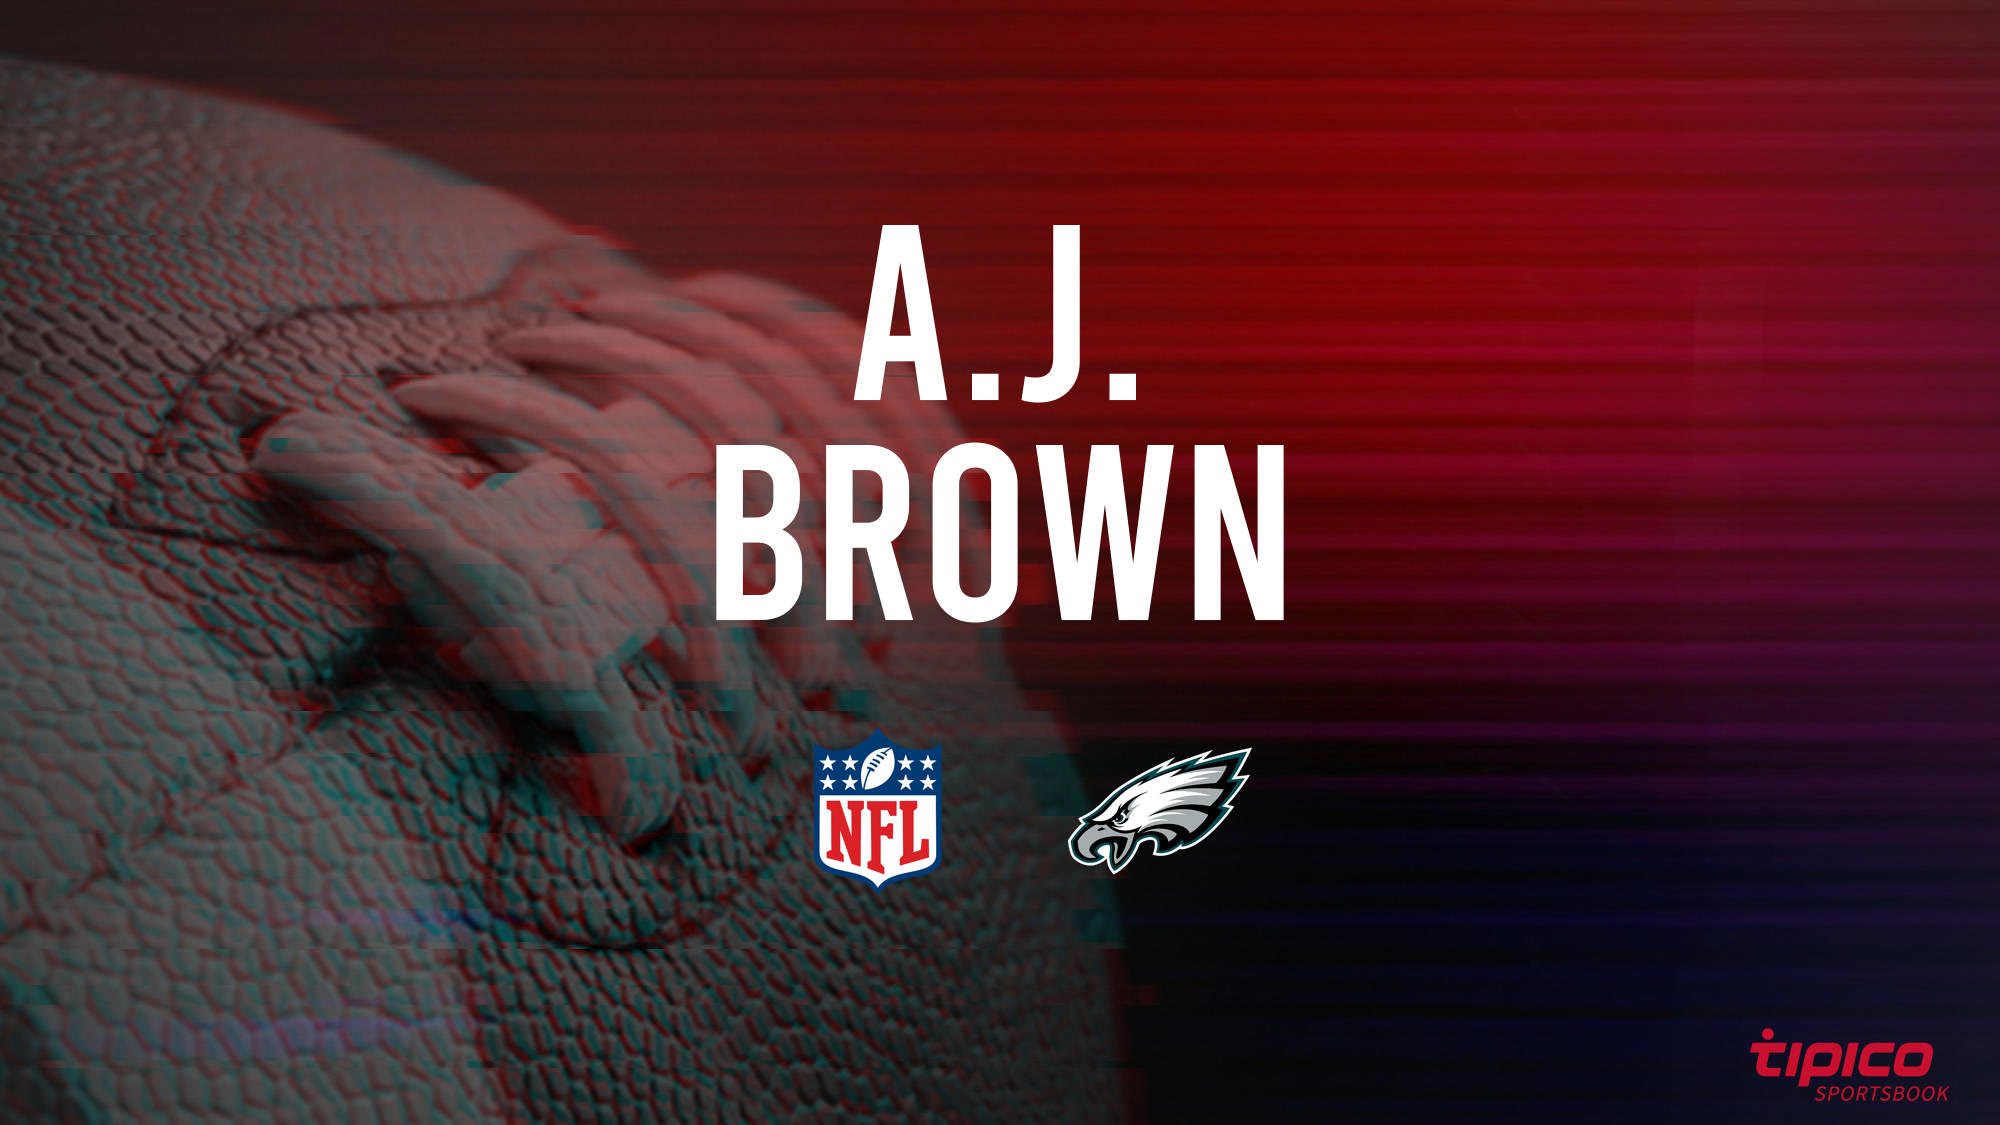 A.J. Brown vs. New York Giants